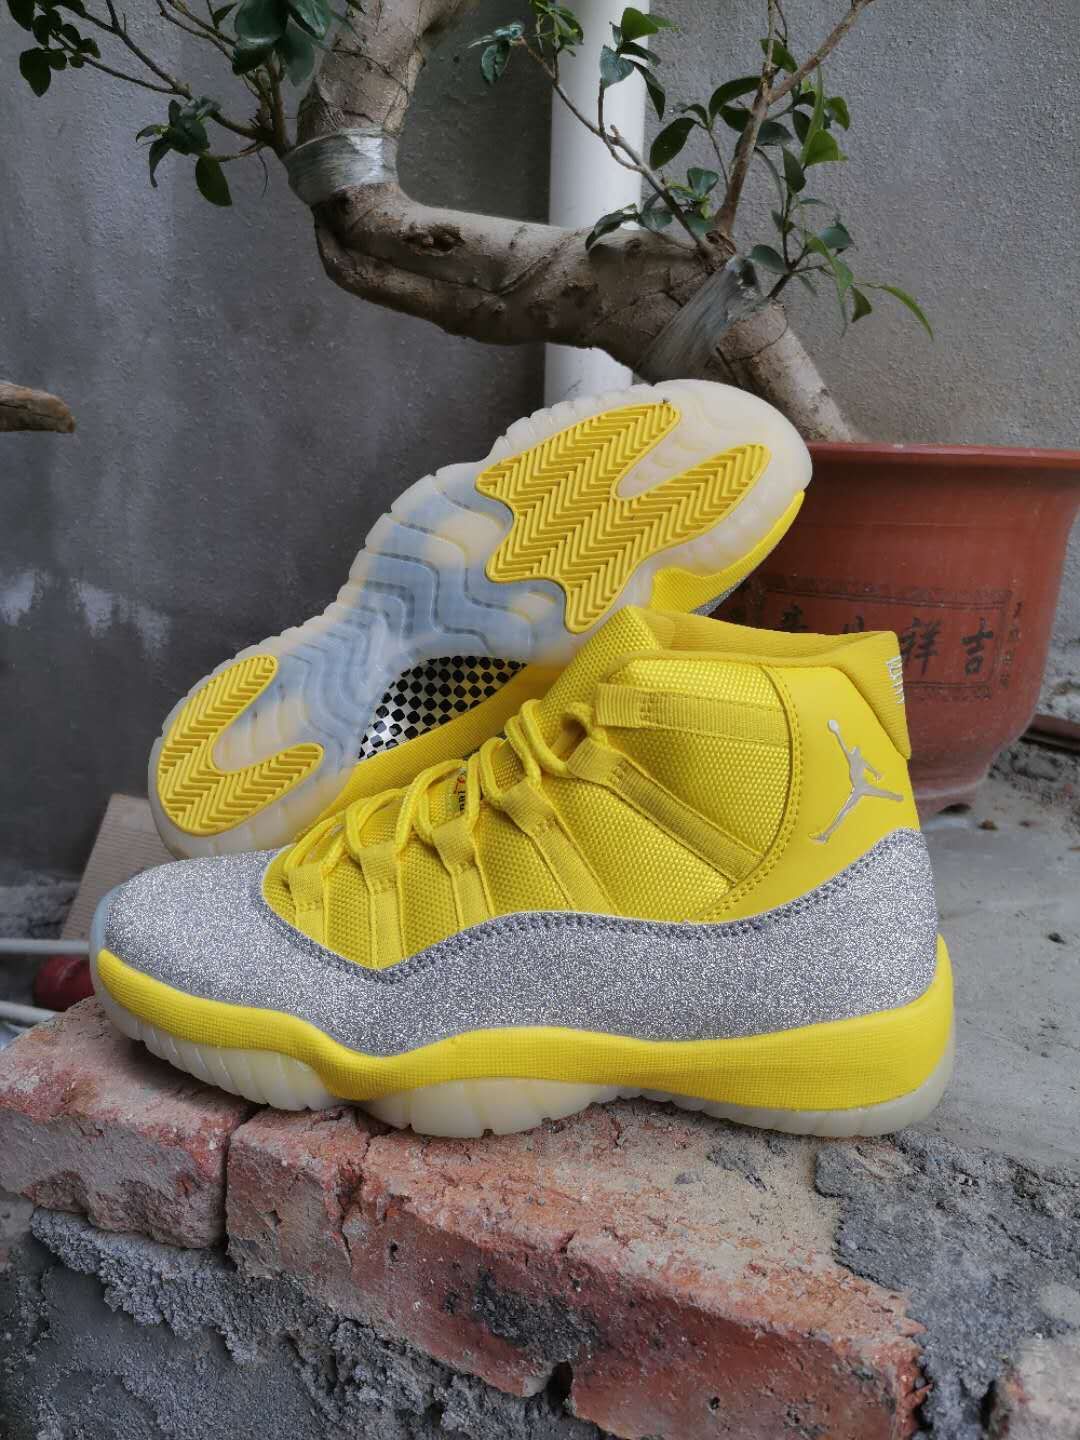 New Air Jordan 11 Gypsophila Yellow Grey Shoes - Click Image to Close